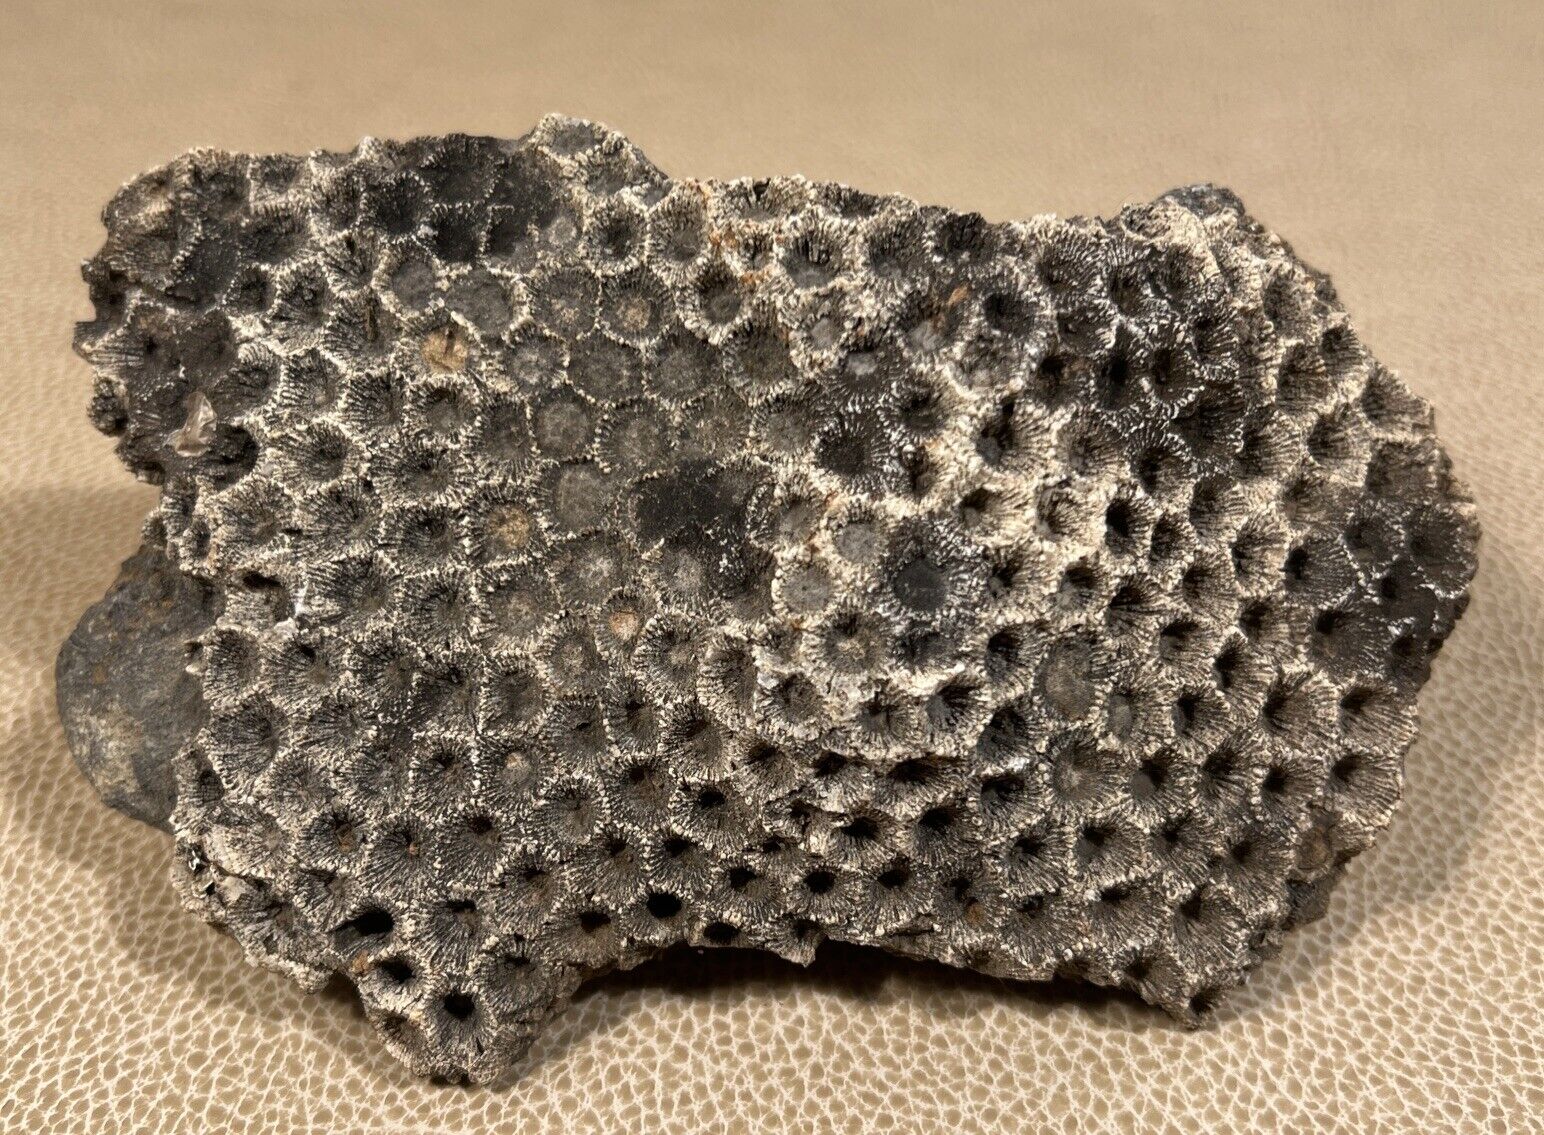 Natural Raw Michigan Petosky Stone - 626g - Devonian Period Coral Fossil